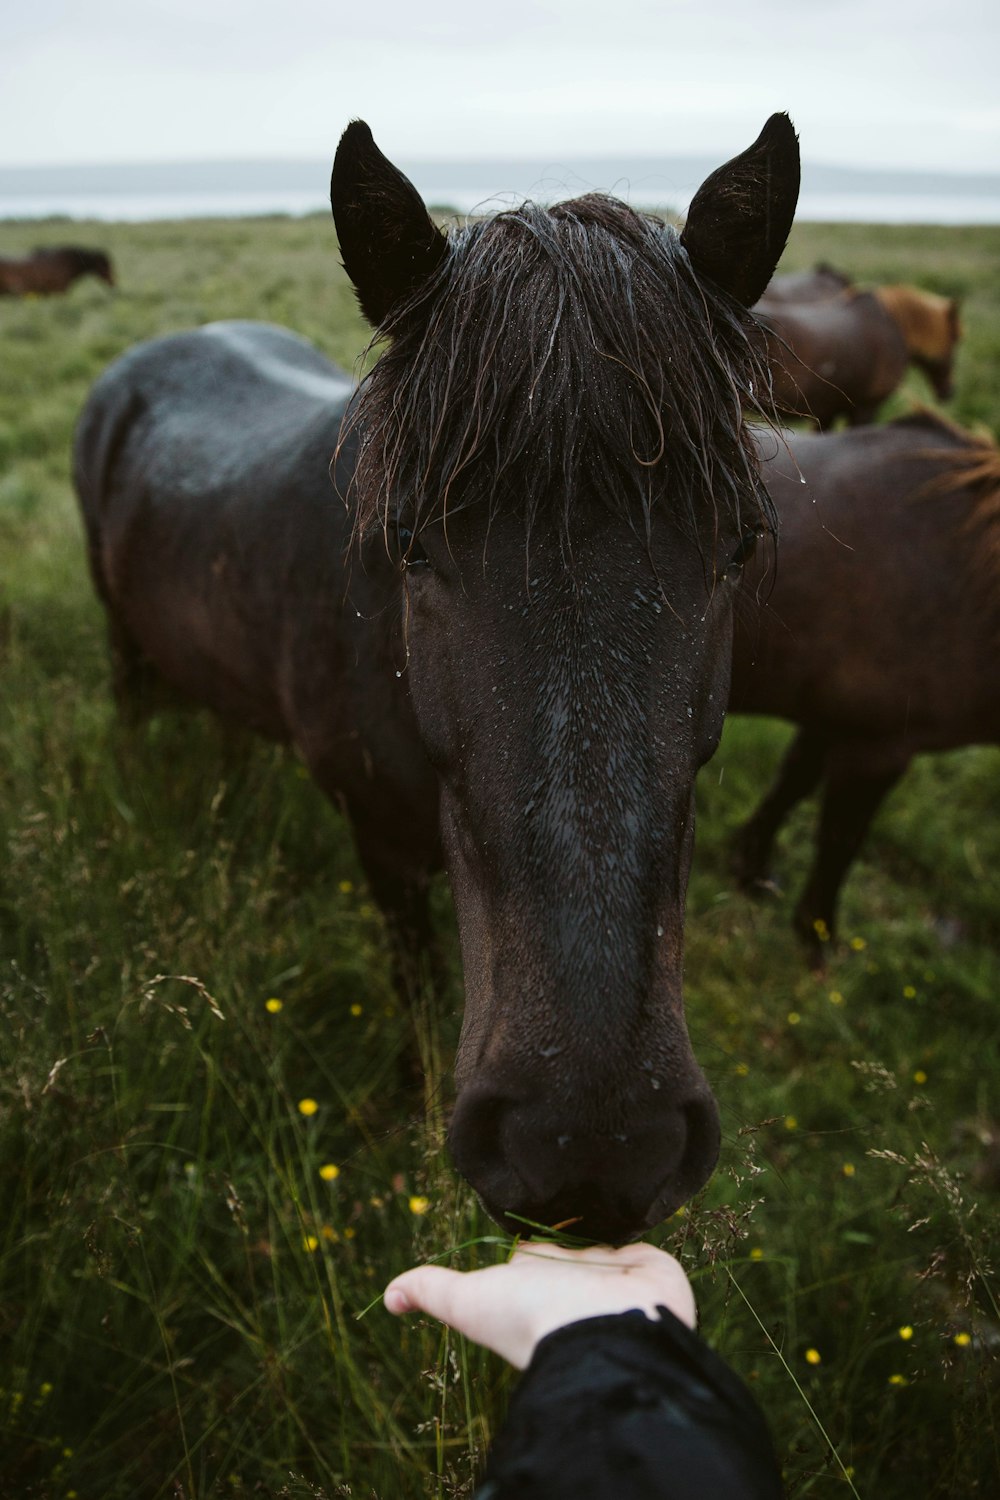 black horse eating grass during daytime